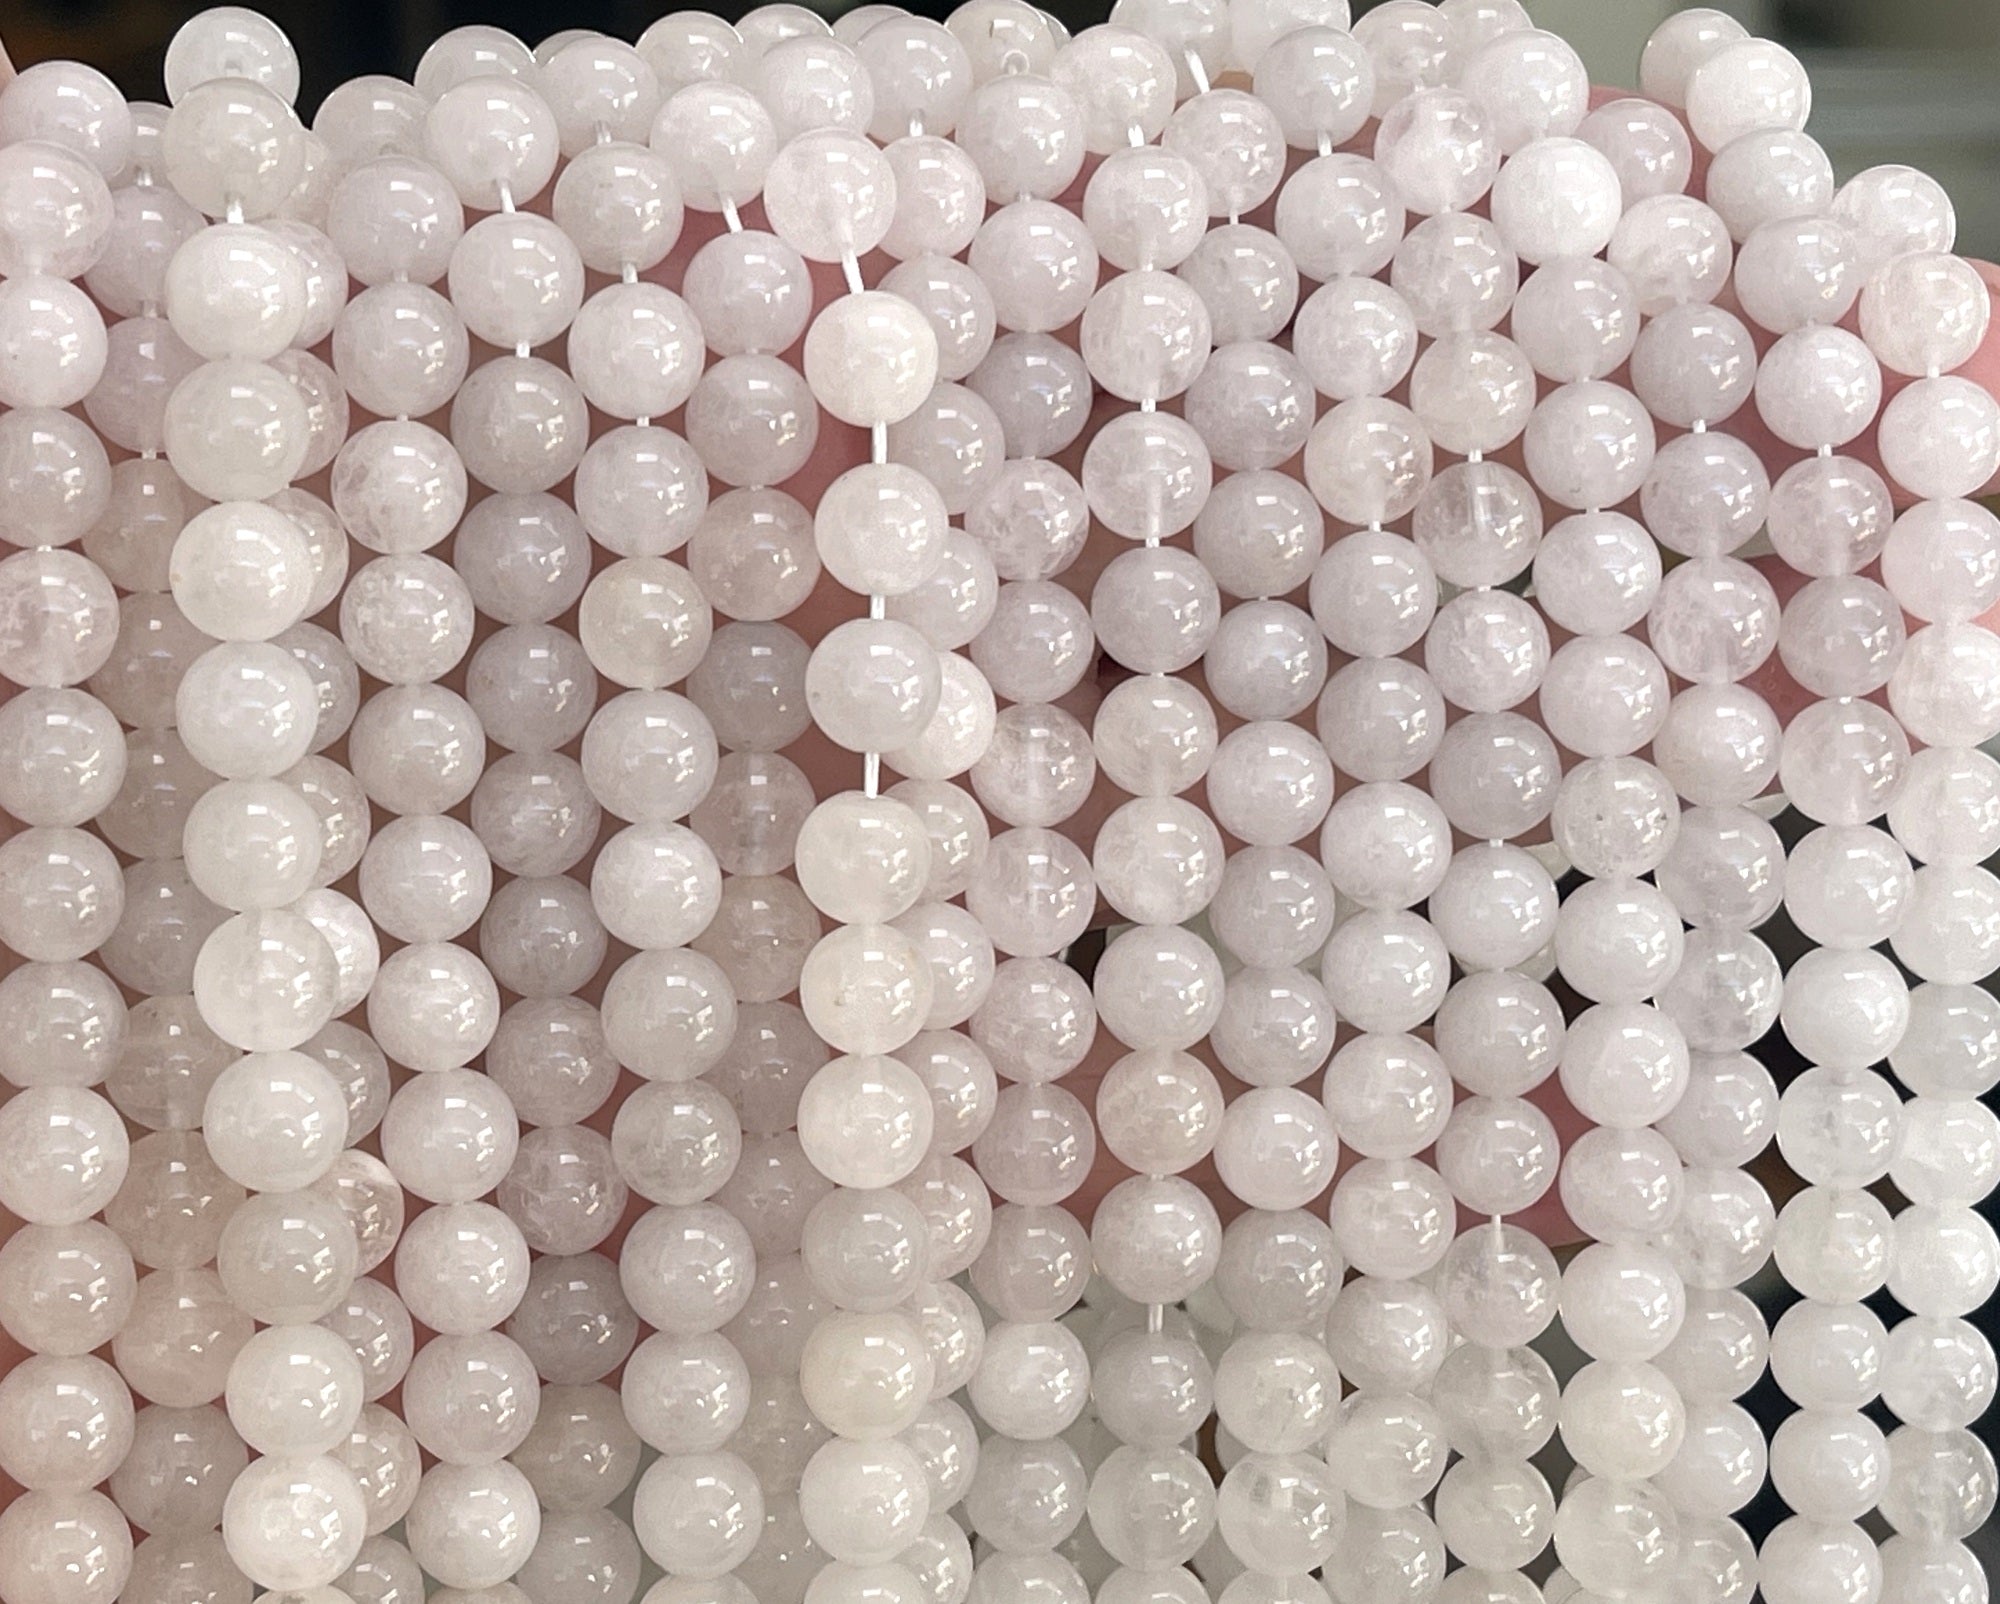 Angola White Quartz 8mm round natural crystal beads 15" strand